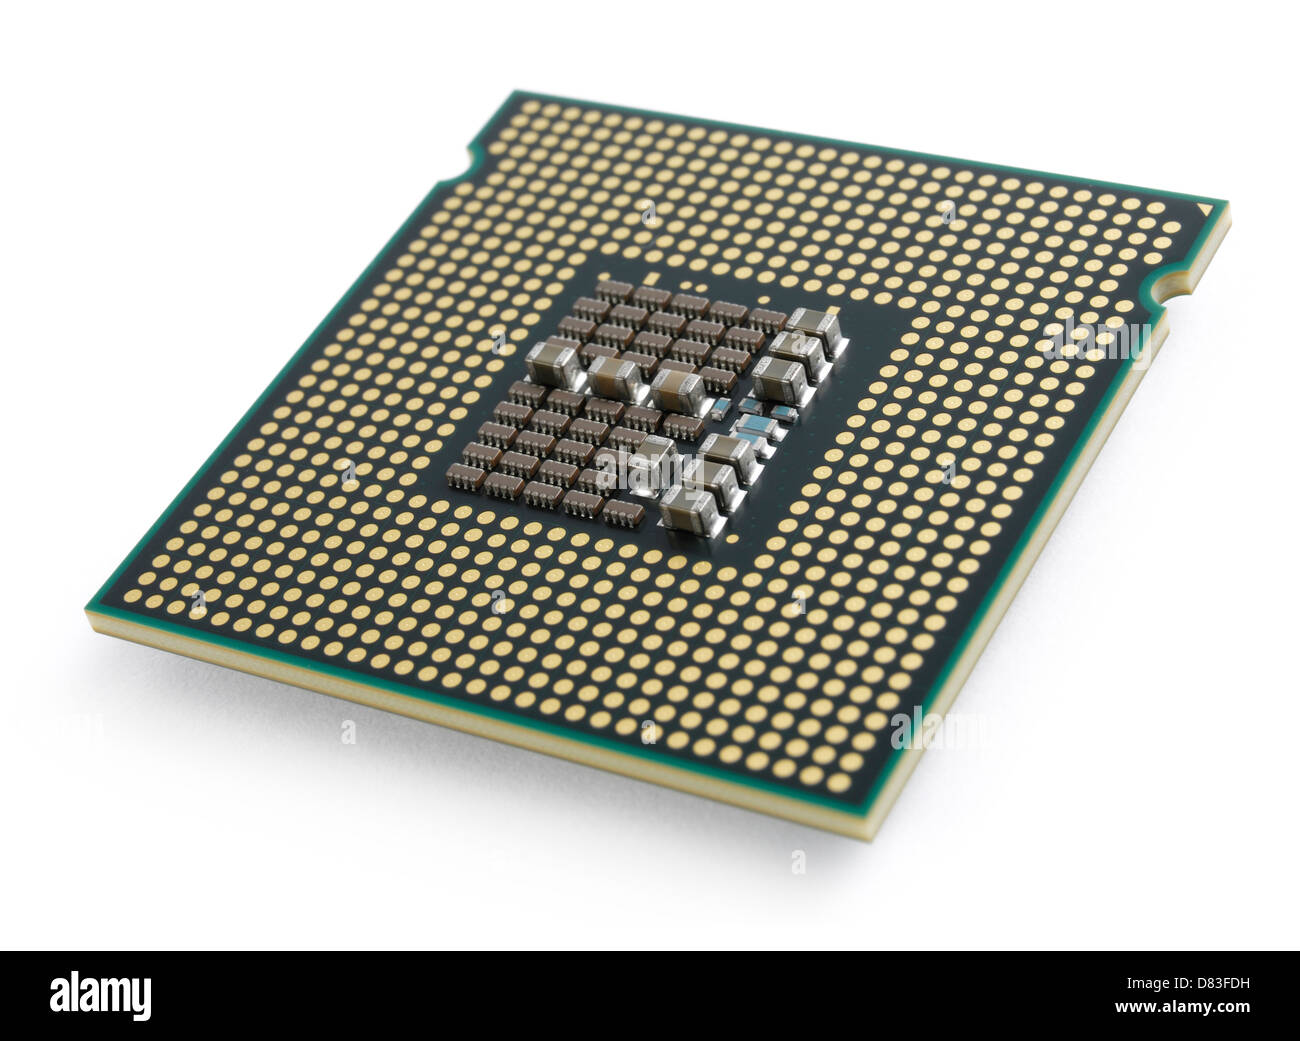 Intel CPU Core 2 Quad Q6600 Quad core computer processor closeup LGA775  socket contacts isolated on white background Stock Photo - Alamy